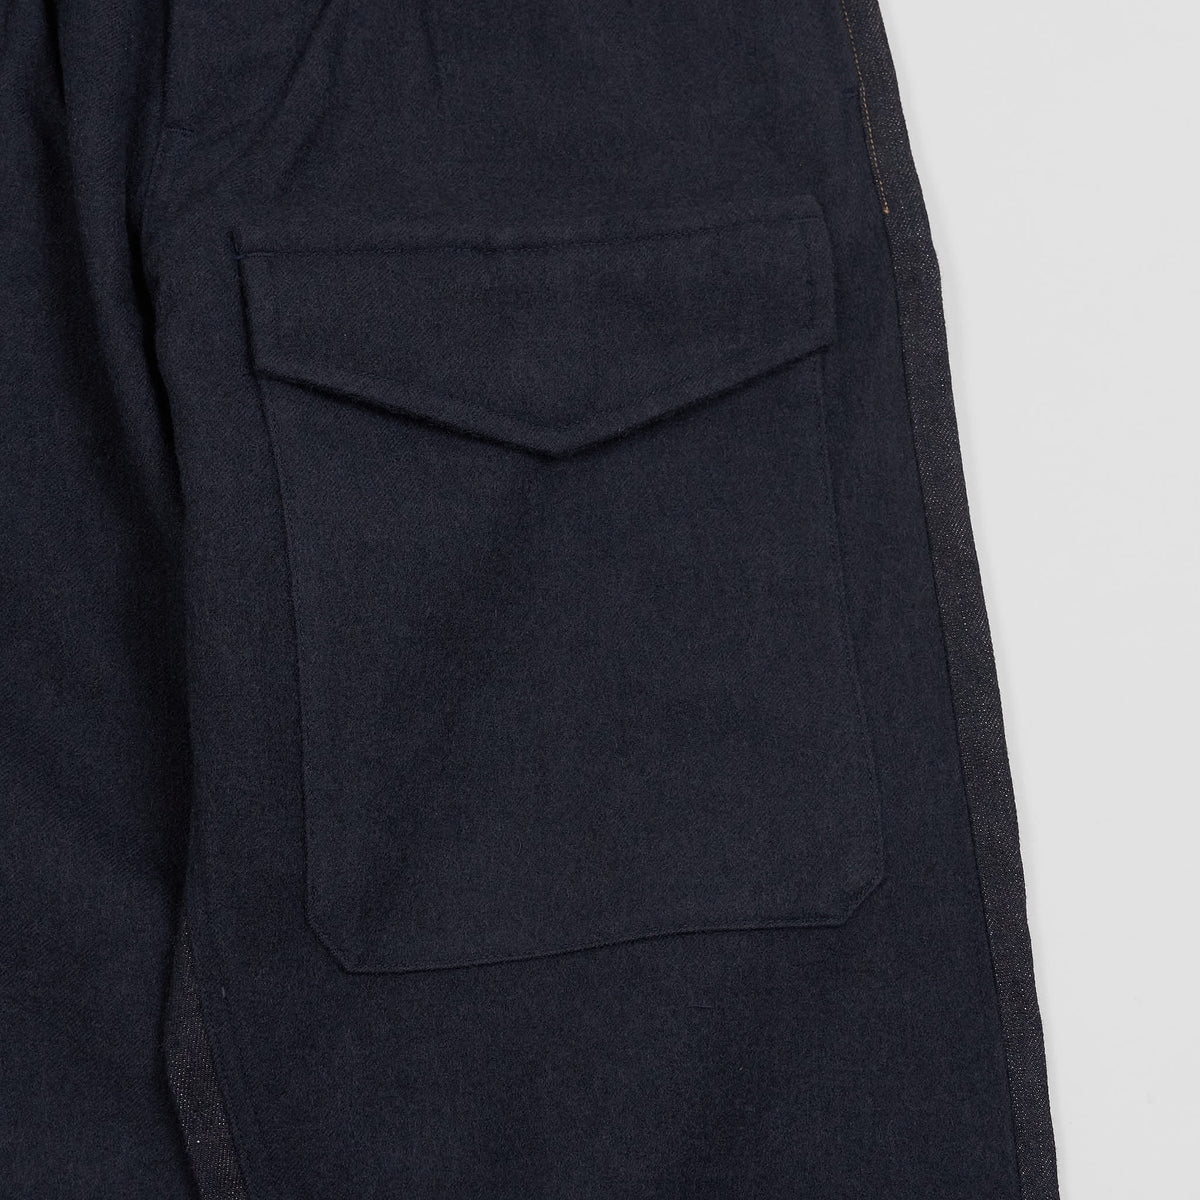 Nigel Cabourn Military Wool / Denim Chino Trousers